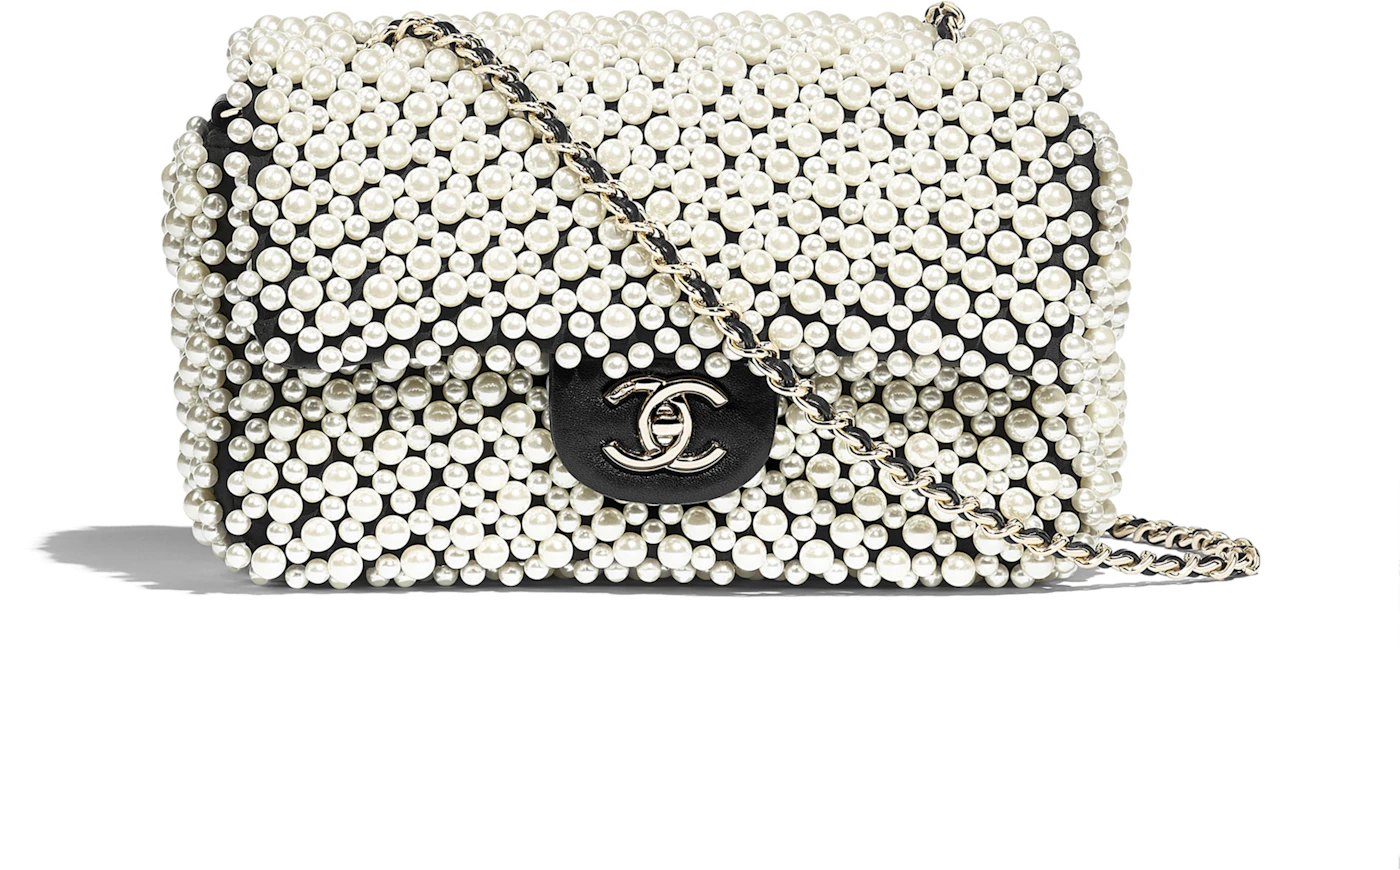 Chanel Black Small Flap Bag - White